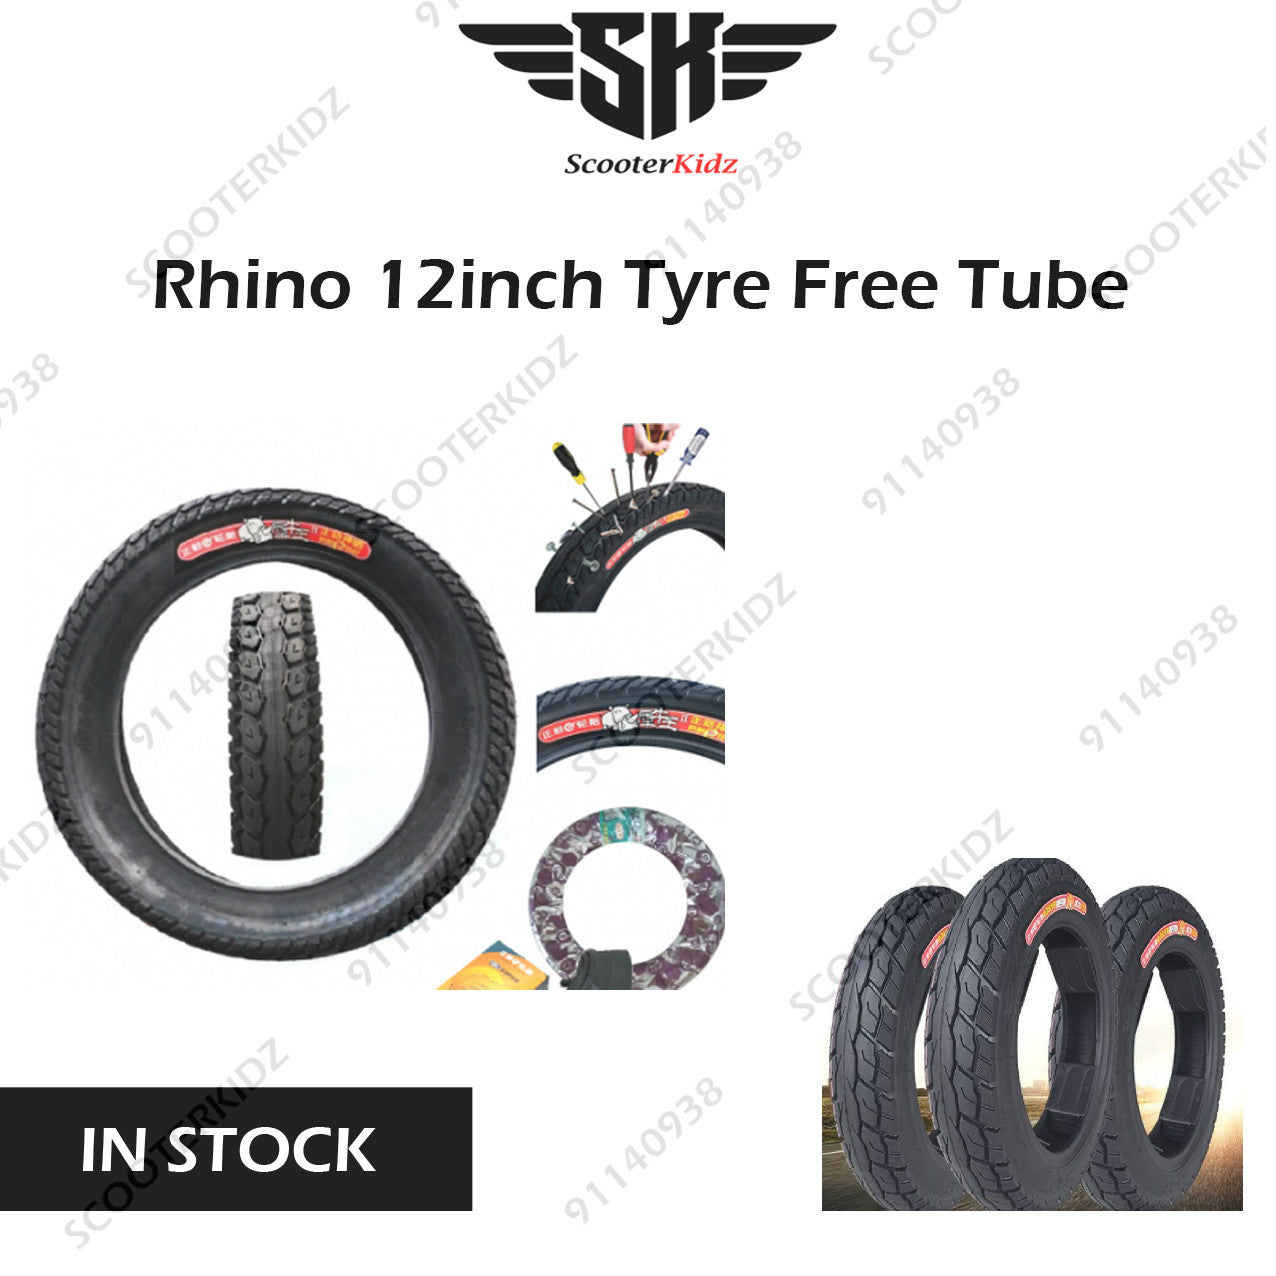 Rhino 12 inch Tire with FREE inner tube